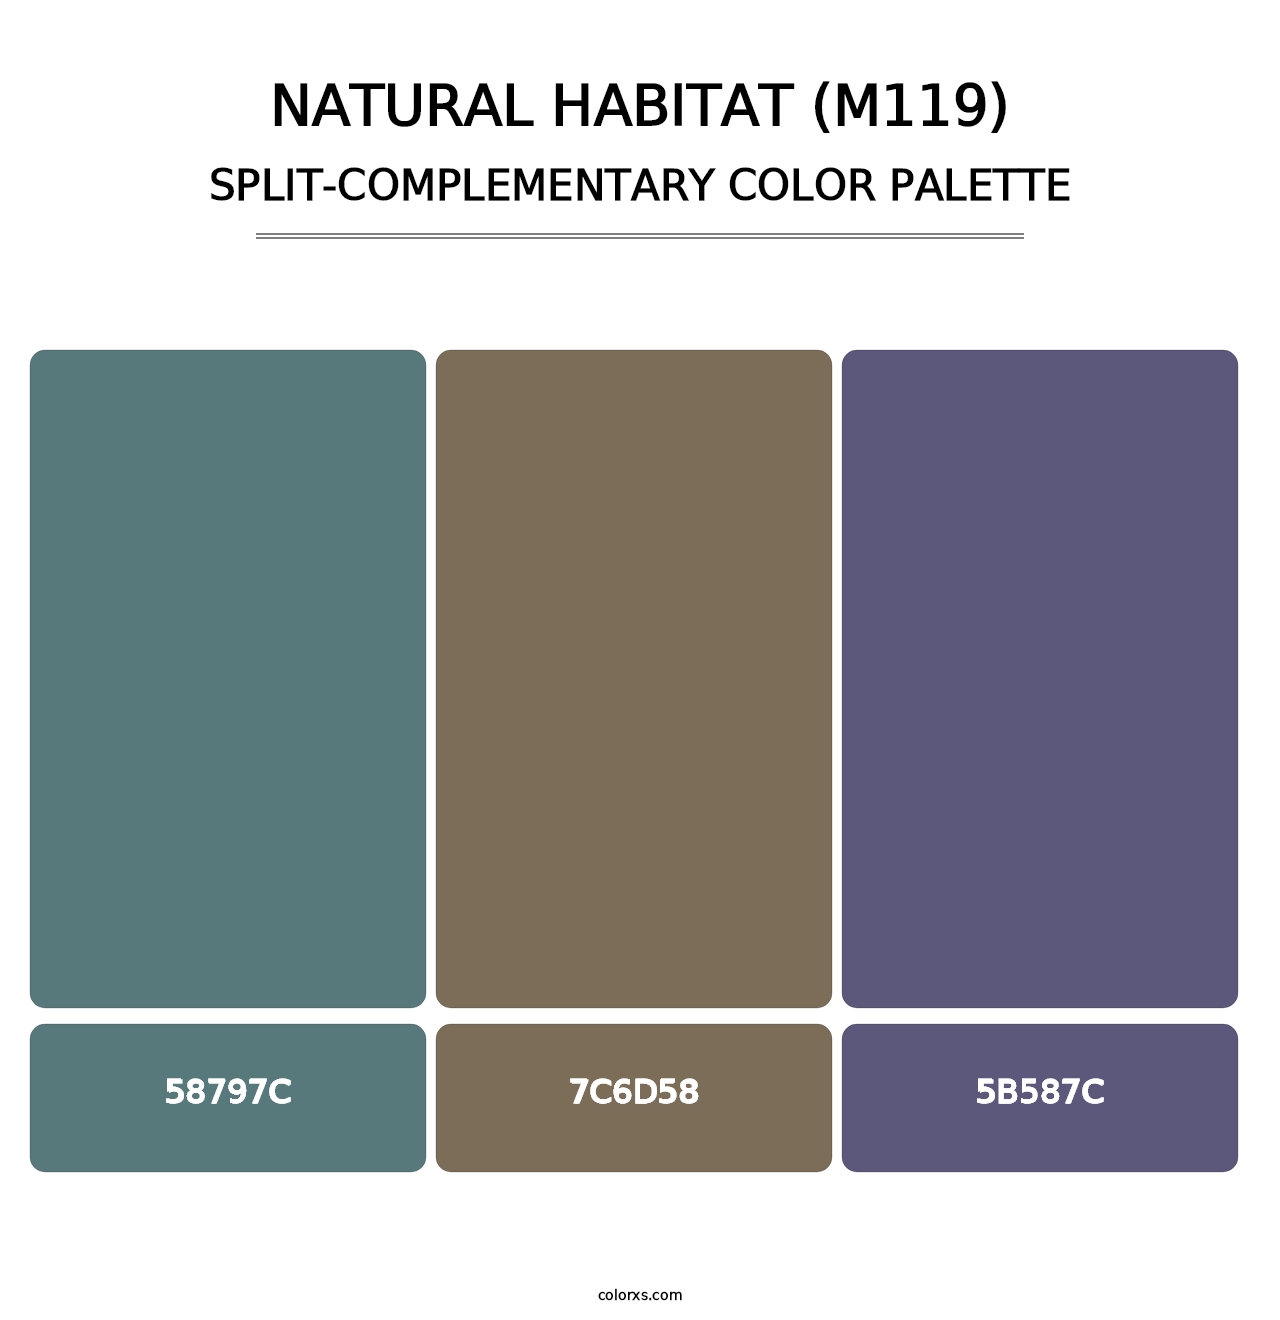 Natural Habitat (M119) - Split-Complementary Color Palette